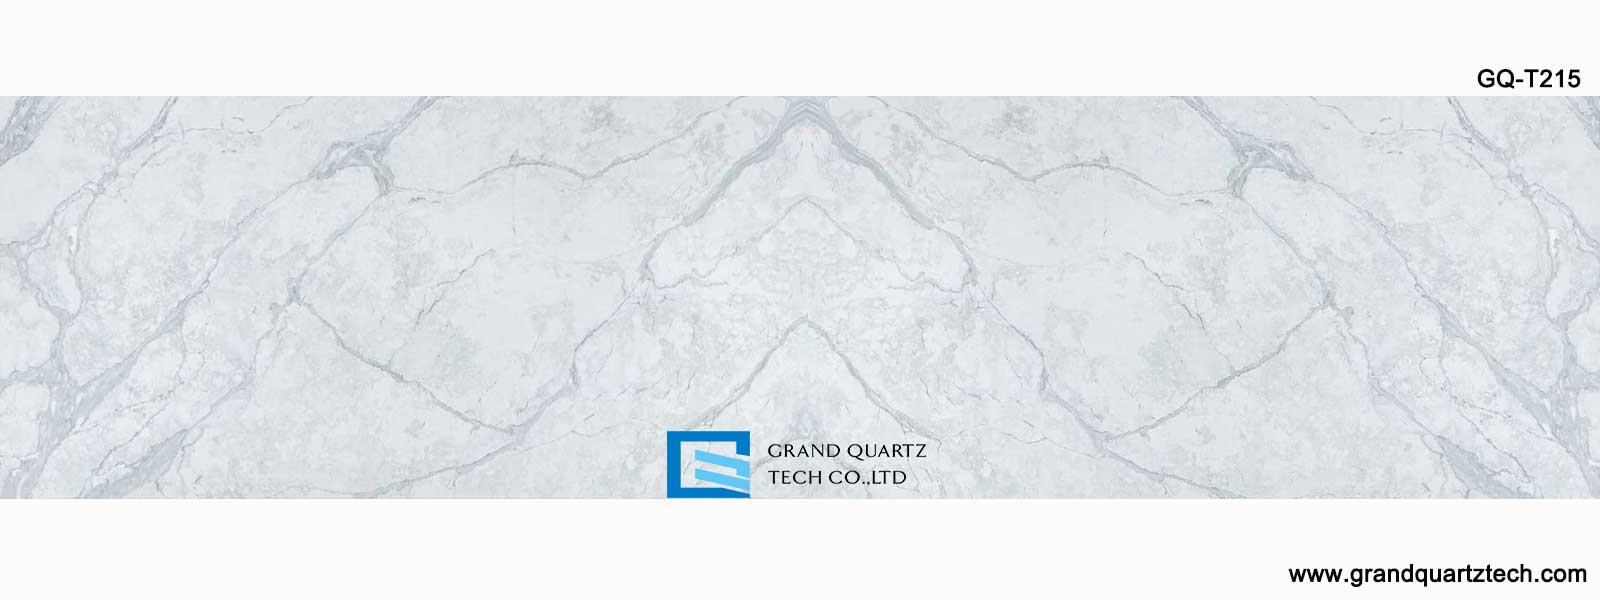 GQ-T215-symmetrical-quartz.jpg 